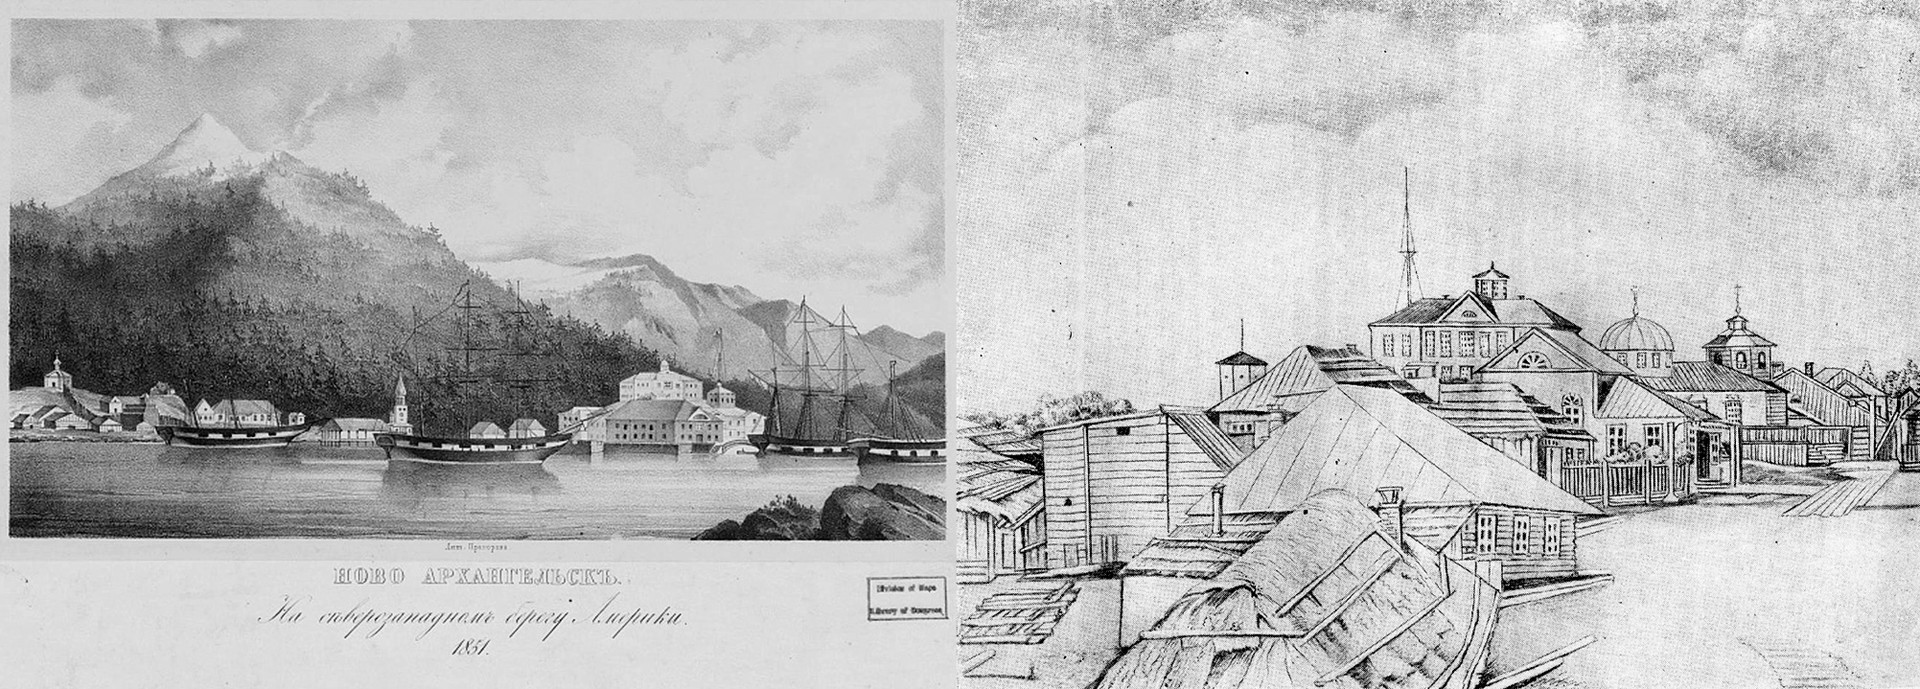 Novo-Arkhangelsk en 1851